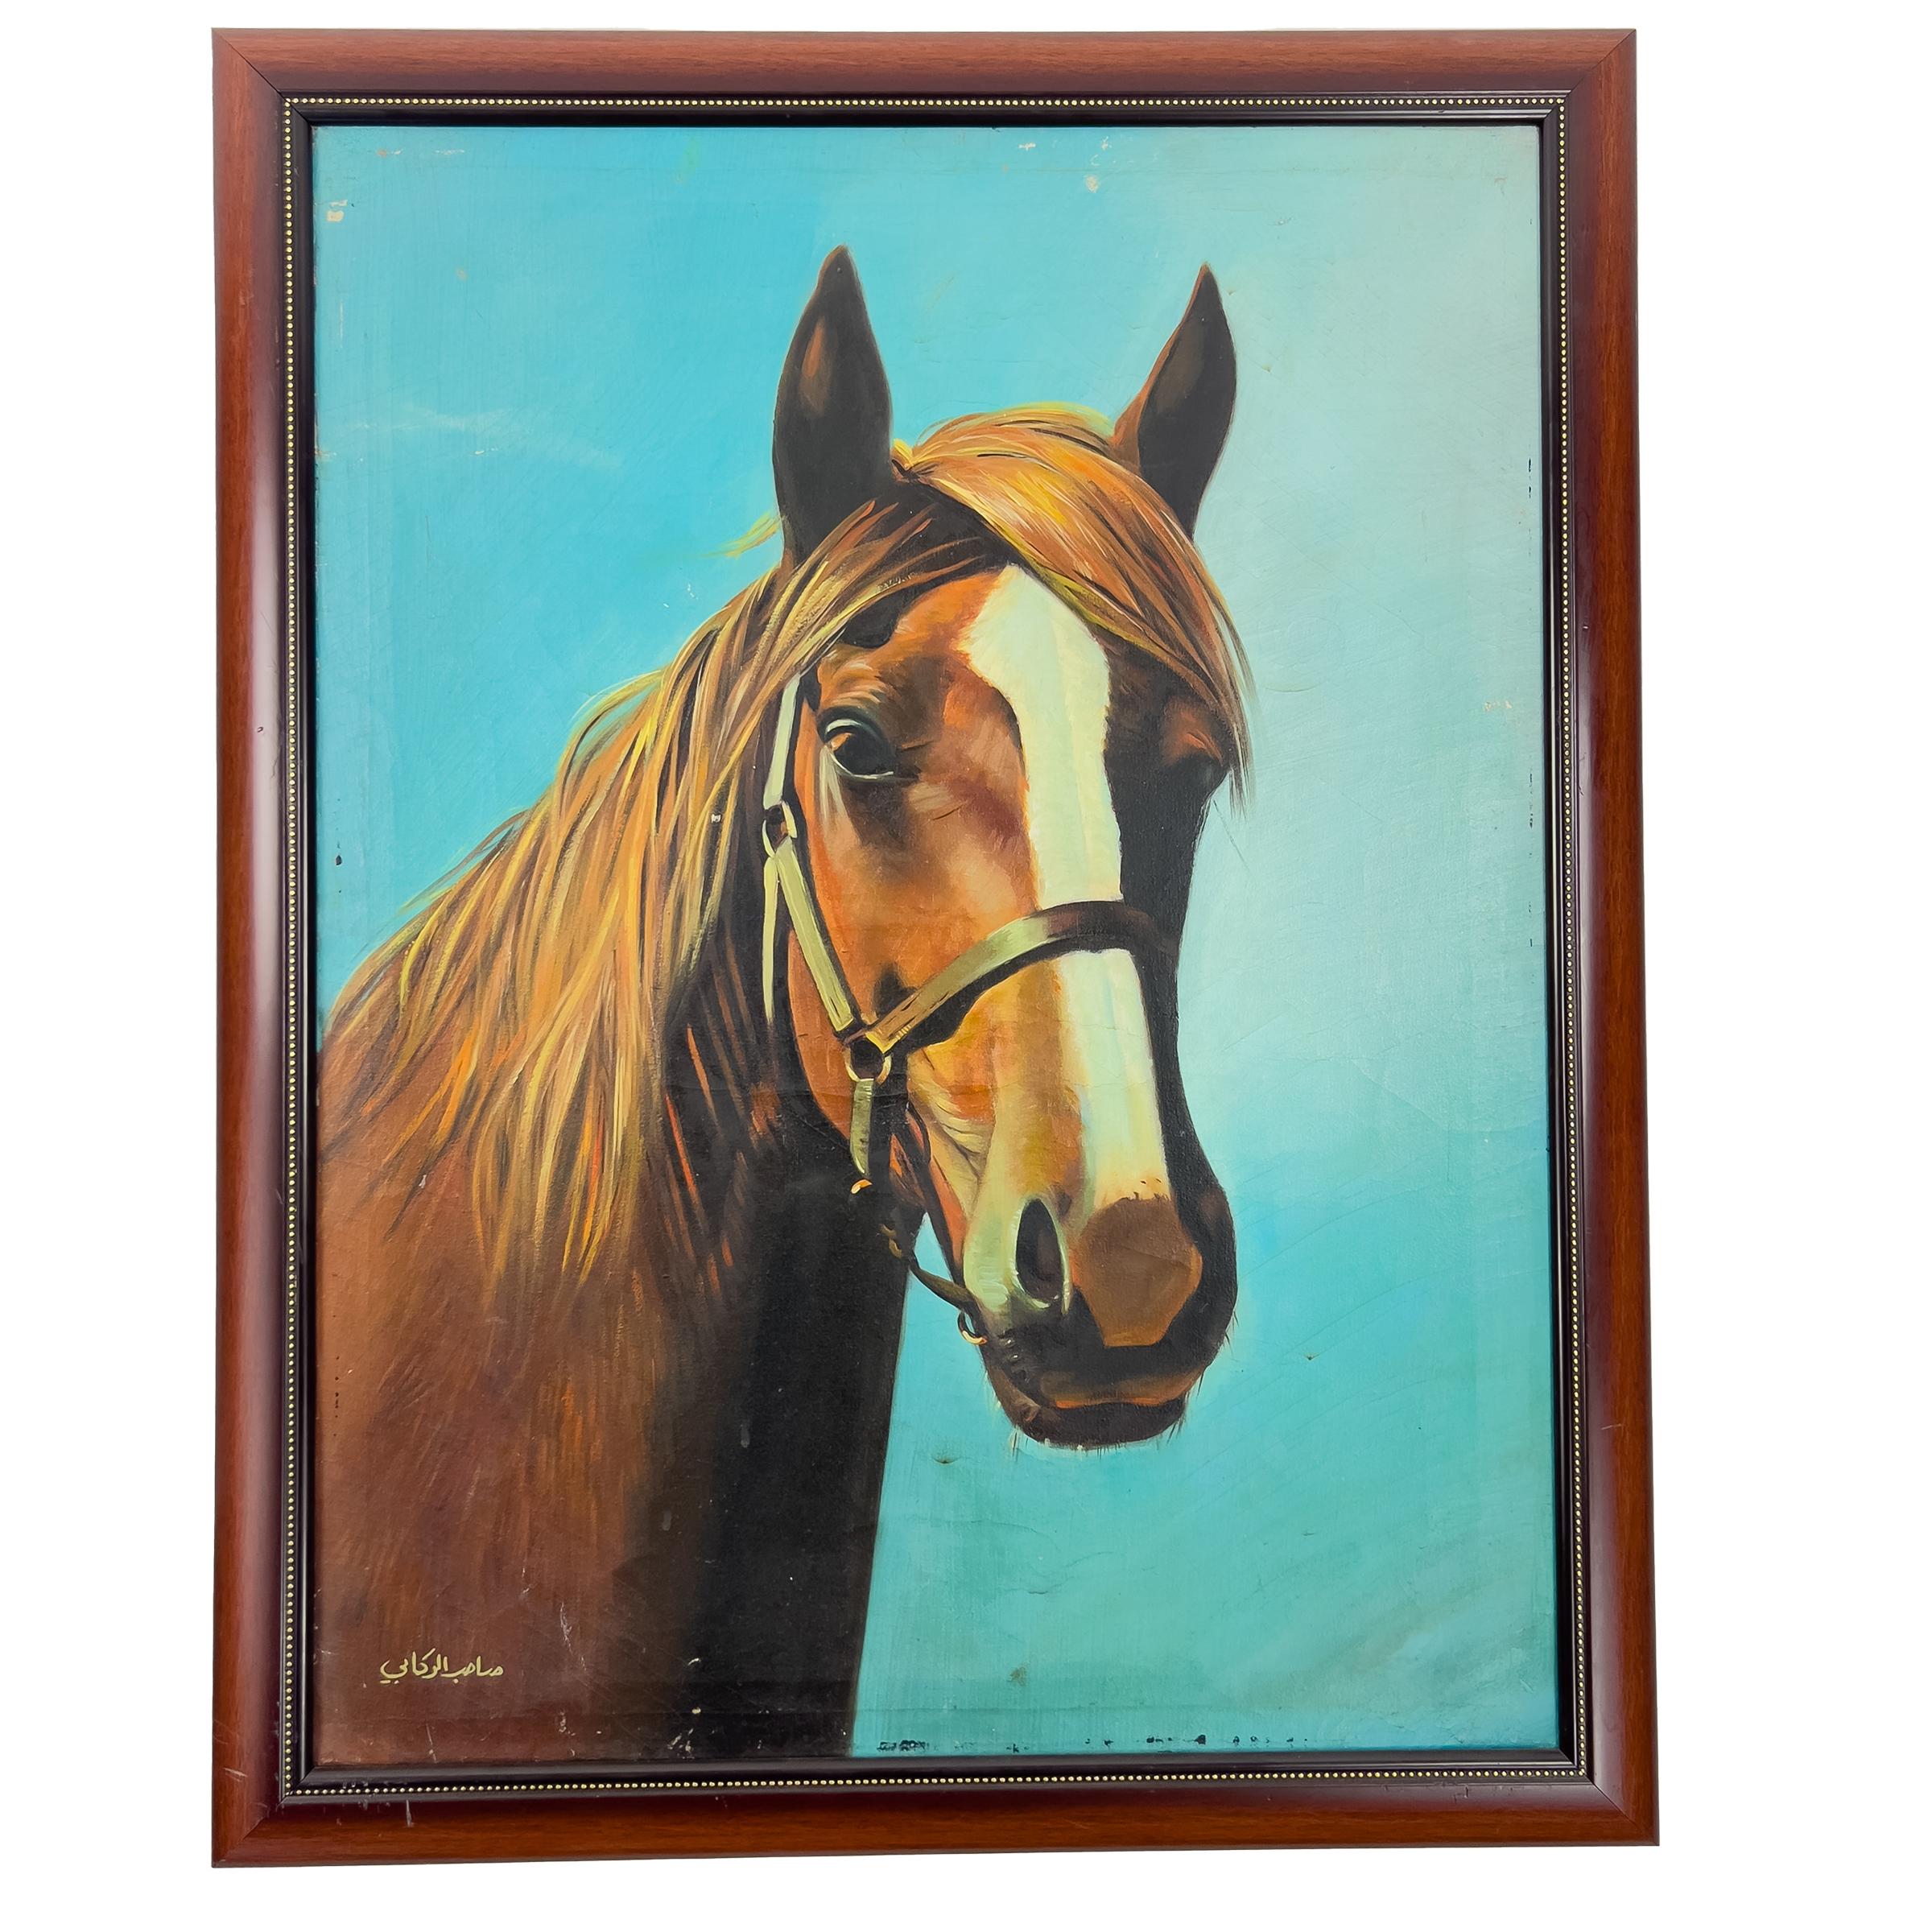 A fine Arabian horse painting on a sky blue background signed lower left, Circa 1970 - 80. 

Dimensions: H: 88cm, W: 79cm.

Canvas: H: 79cm, W: 60cm.